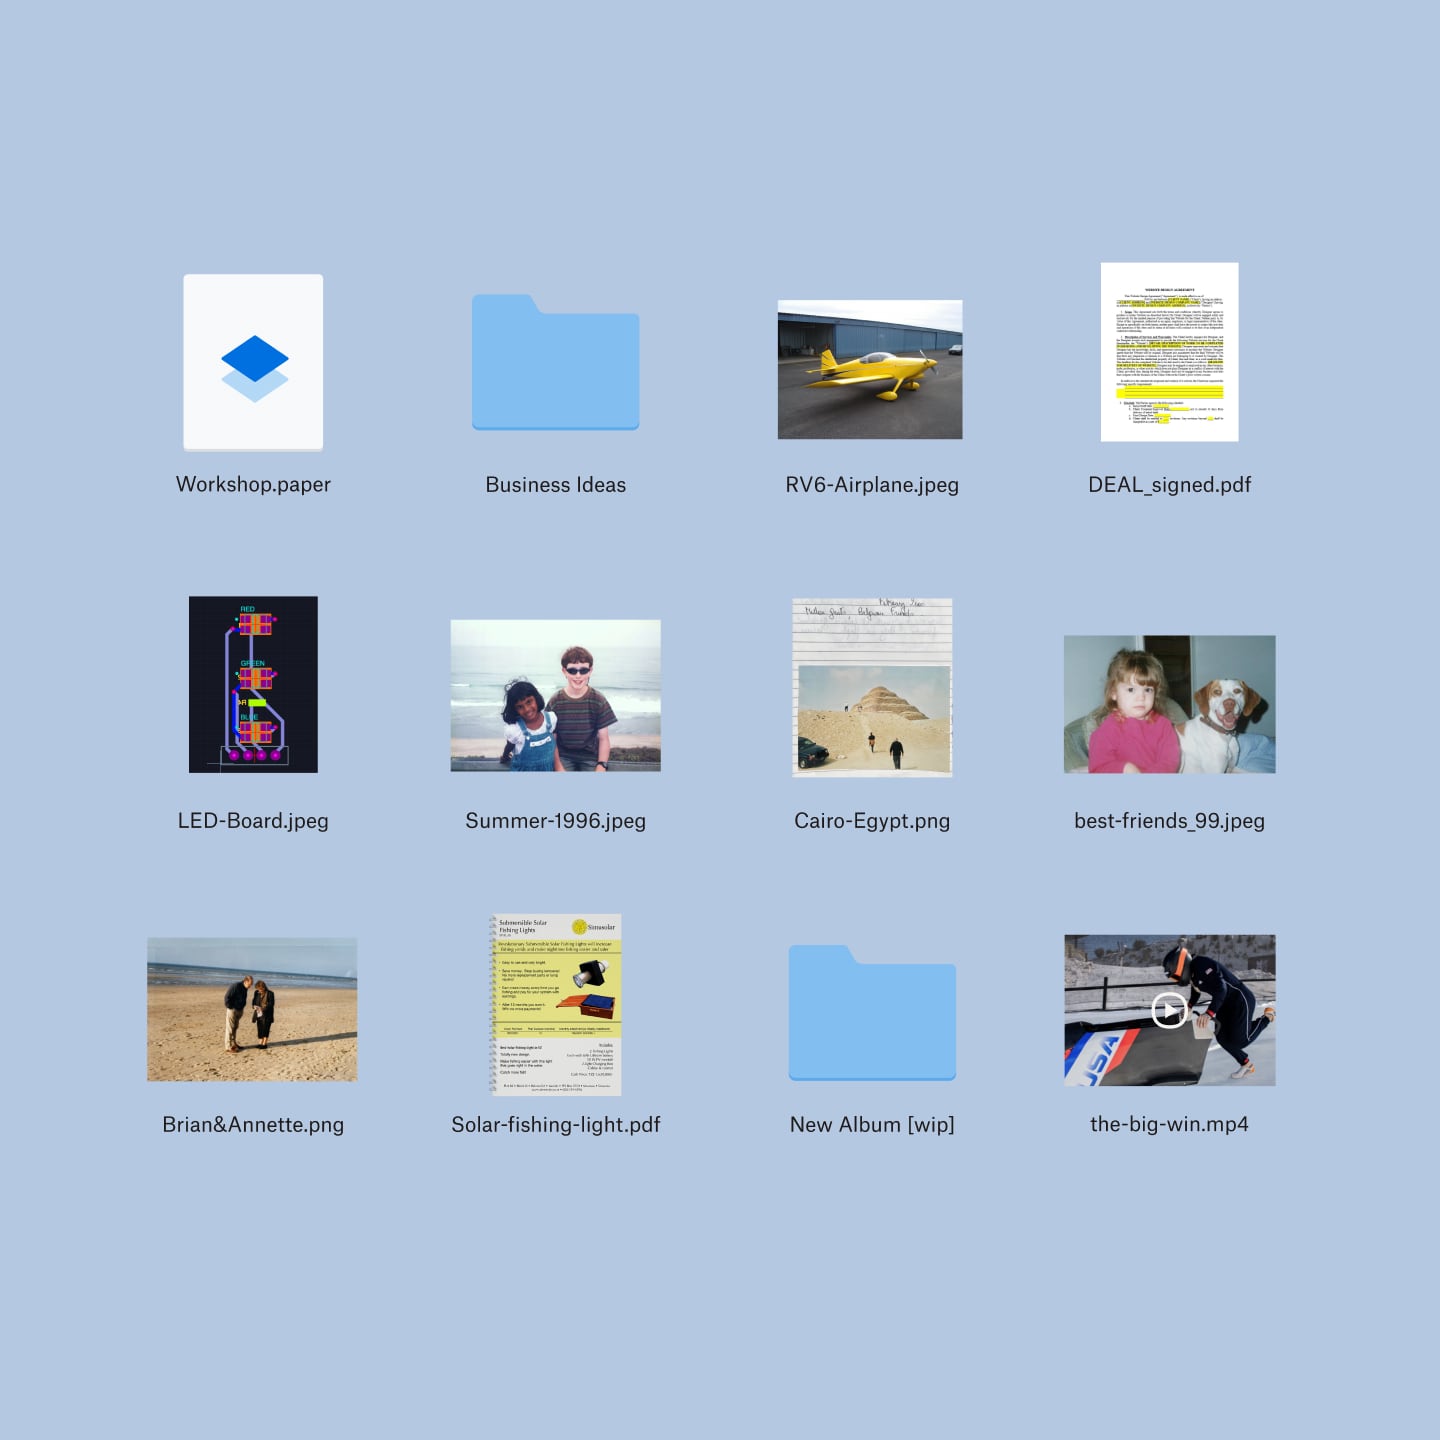 Dropbox 中的 12 个文件和文件夹，包括图片、商业创意和相册。